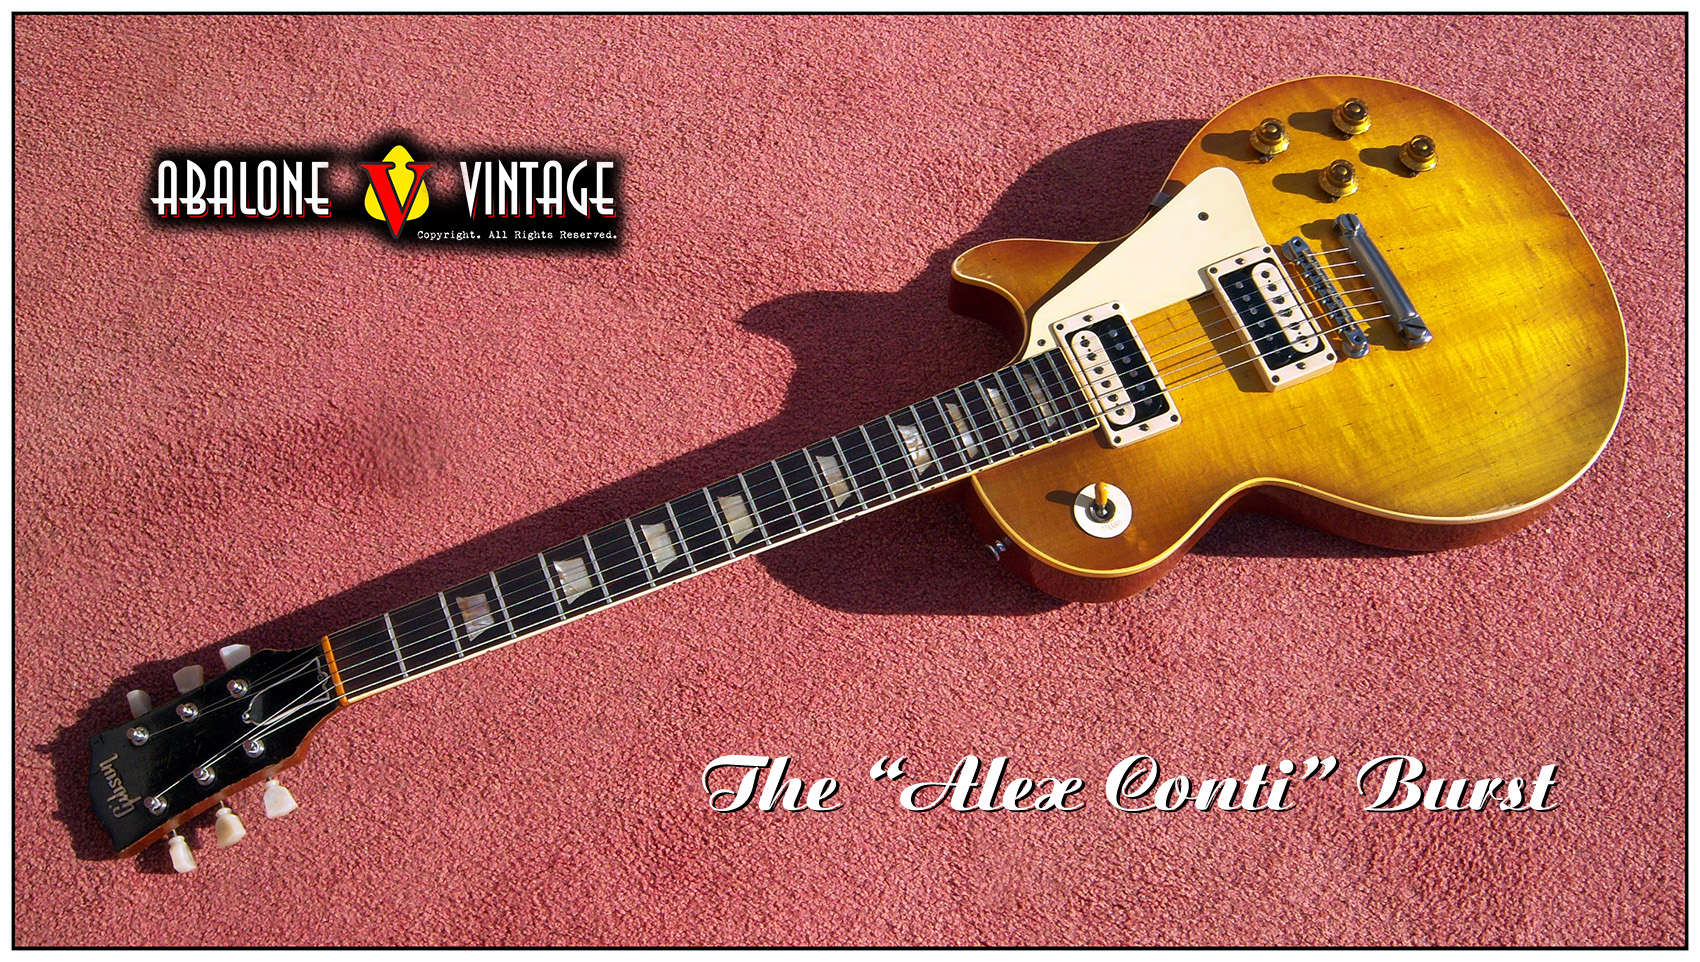 1958 Gibson Les Paul Standard Guitar. 8 5385 "Alex Conti" Burst.